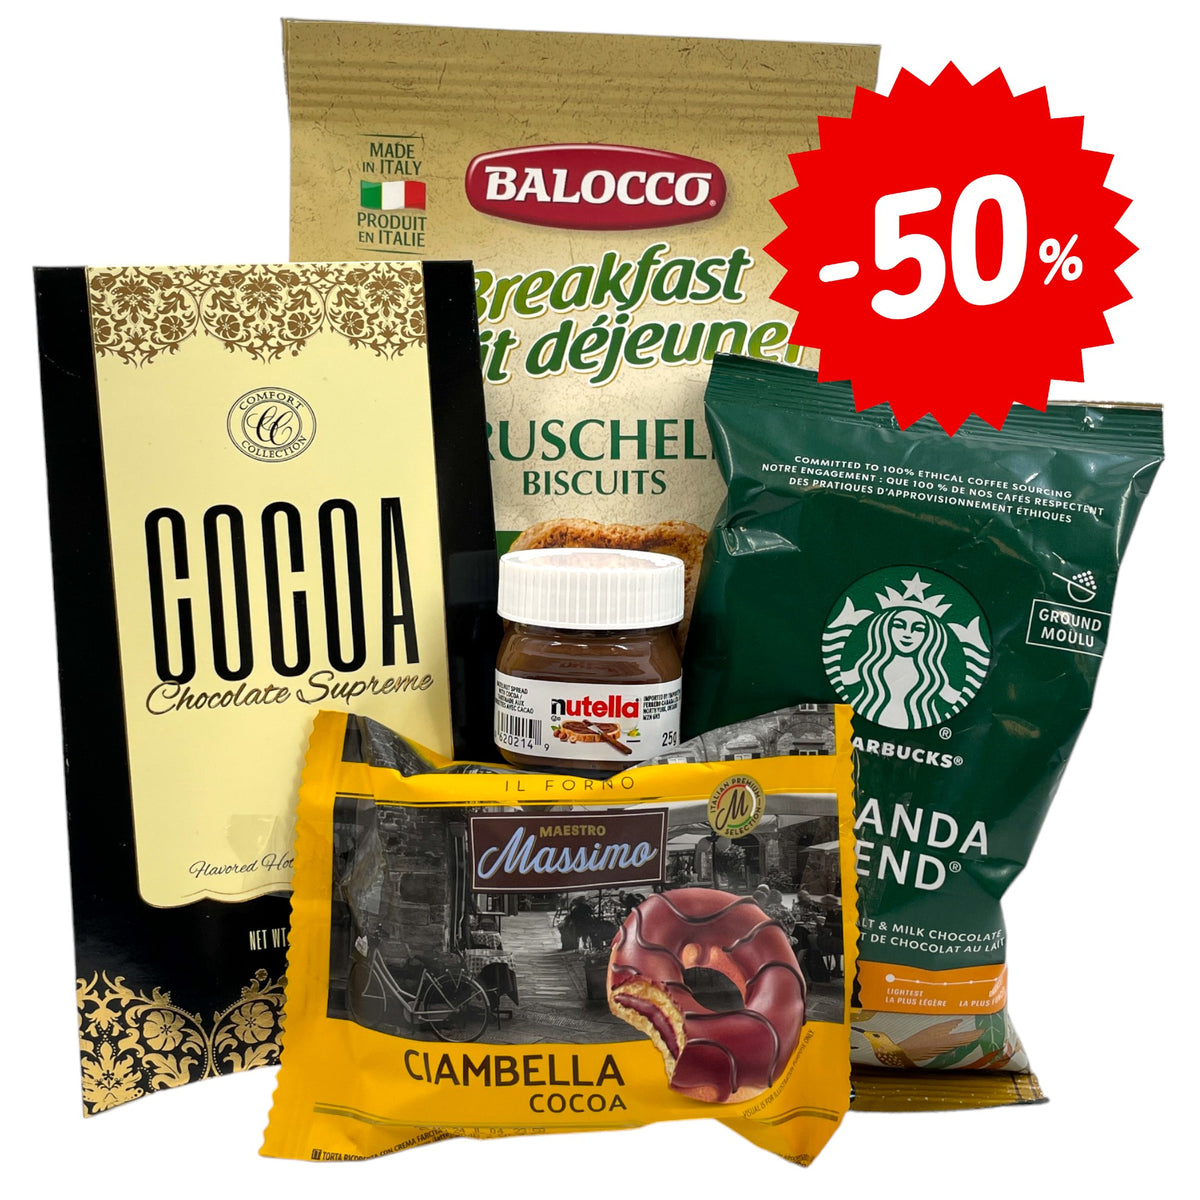 SALE -Gourmet Breakfast Delights: Starbucks, Nutella and Donut Gift Pack REGULAR PRICE $26